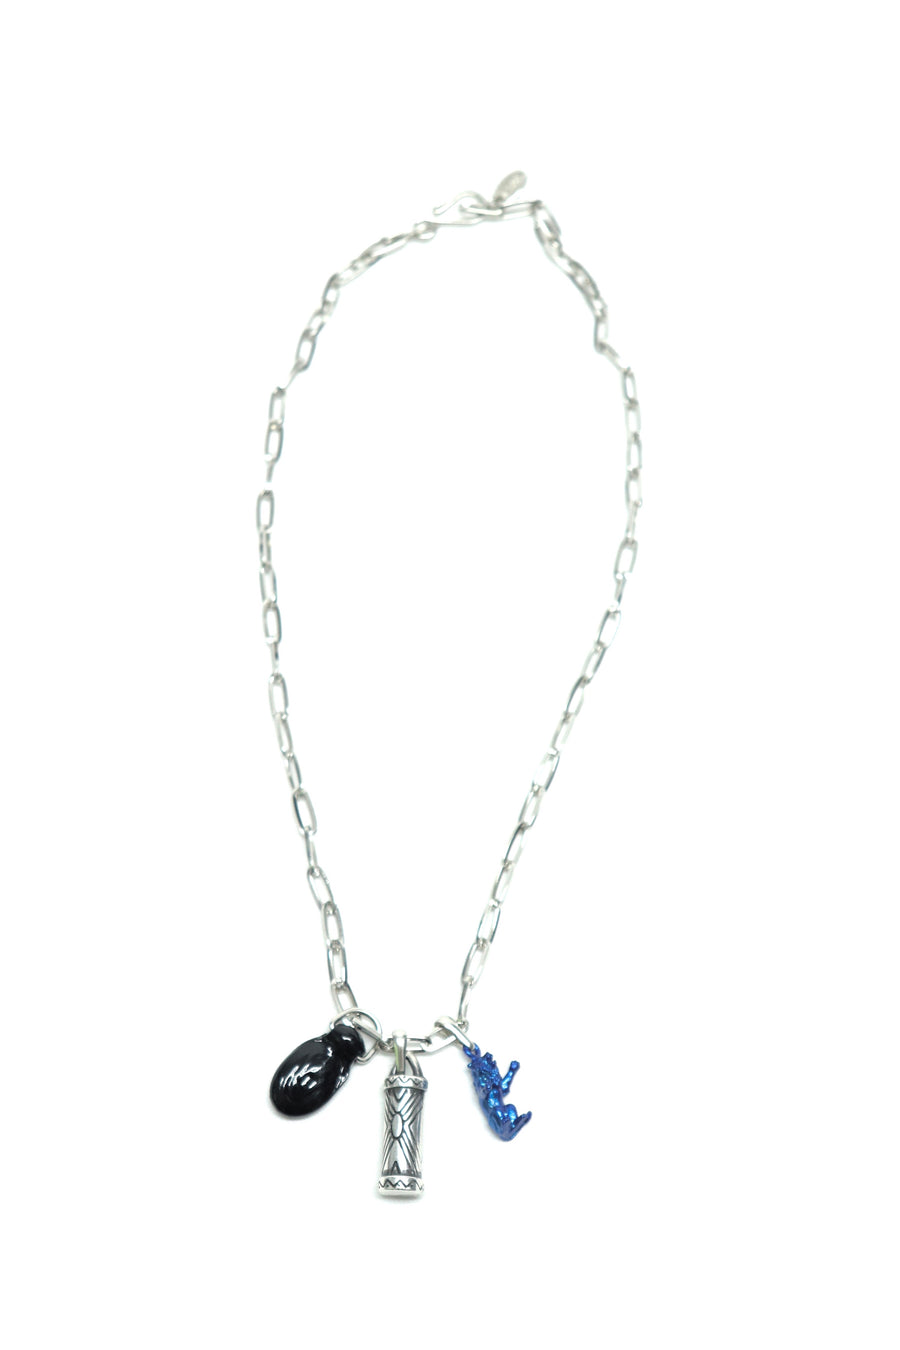 TOGA VIRILIS(トーガ ビリリース)22awのMotif necklace MIXの通販 